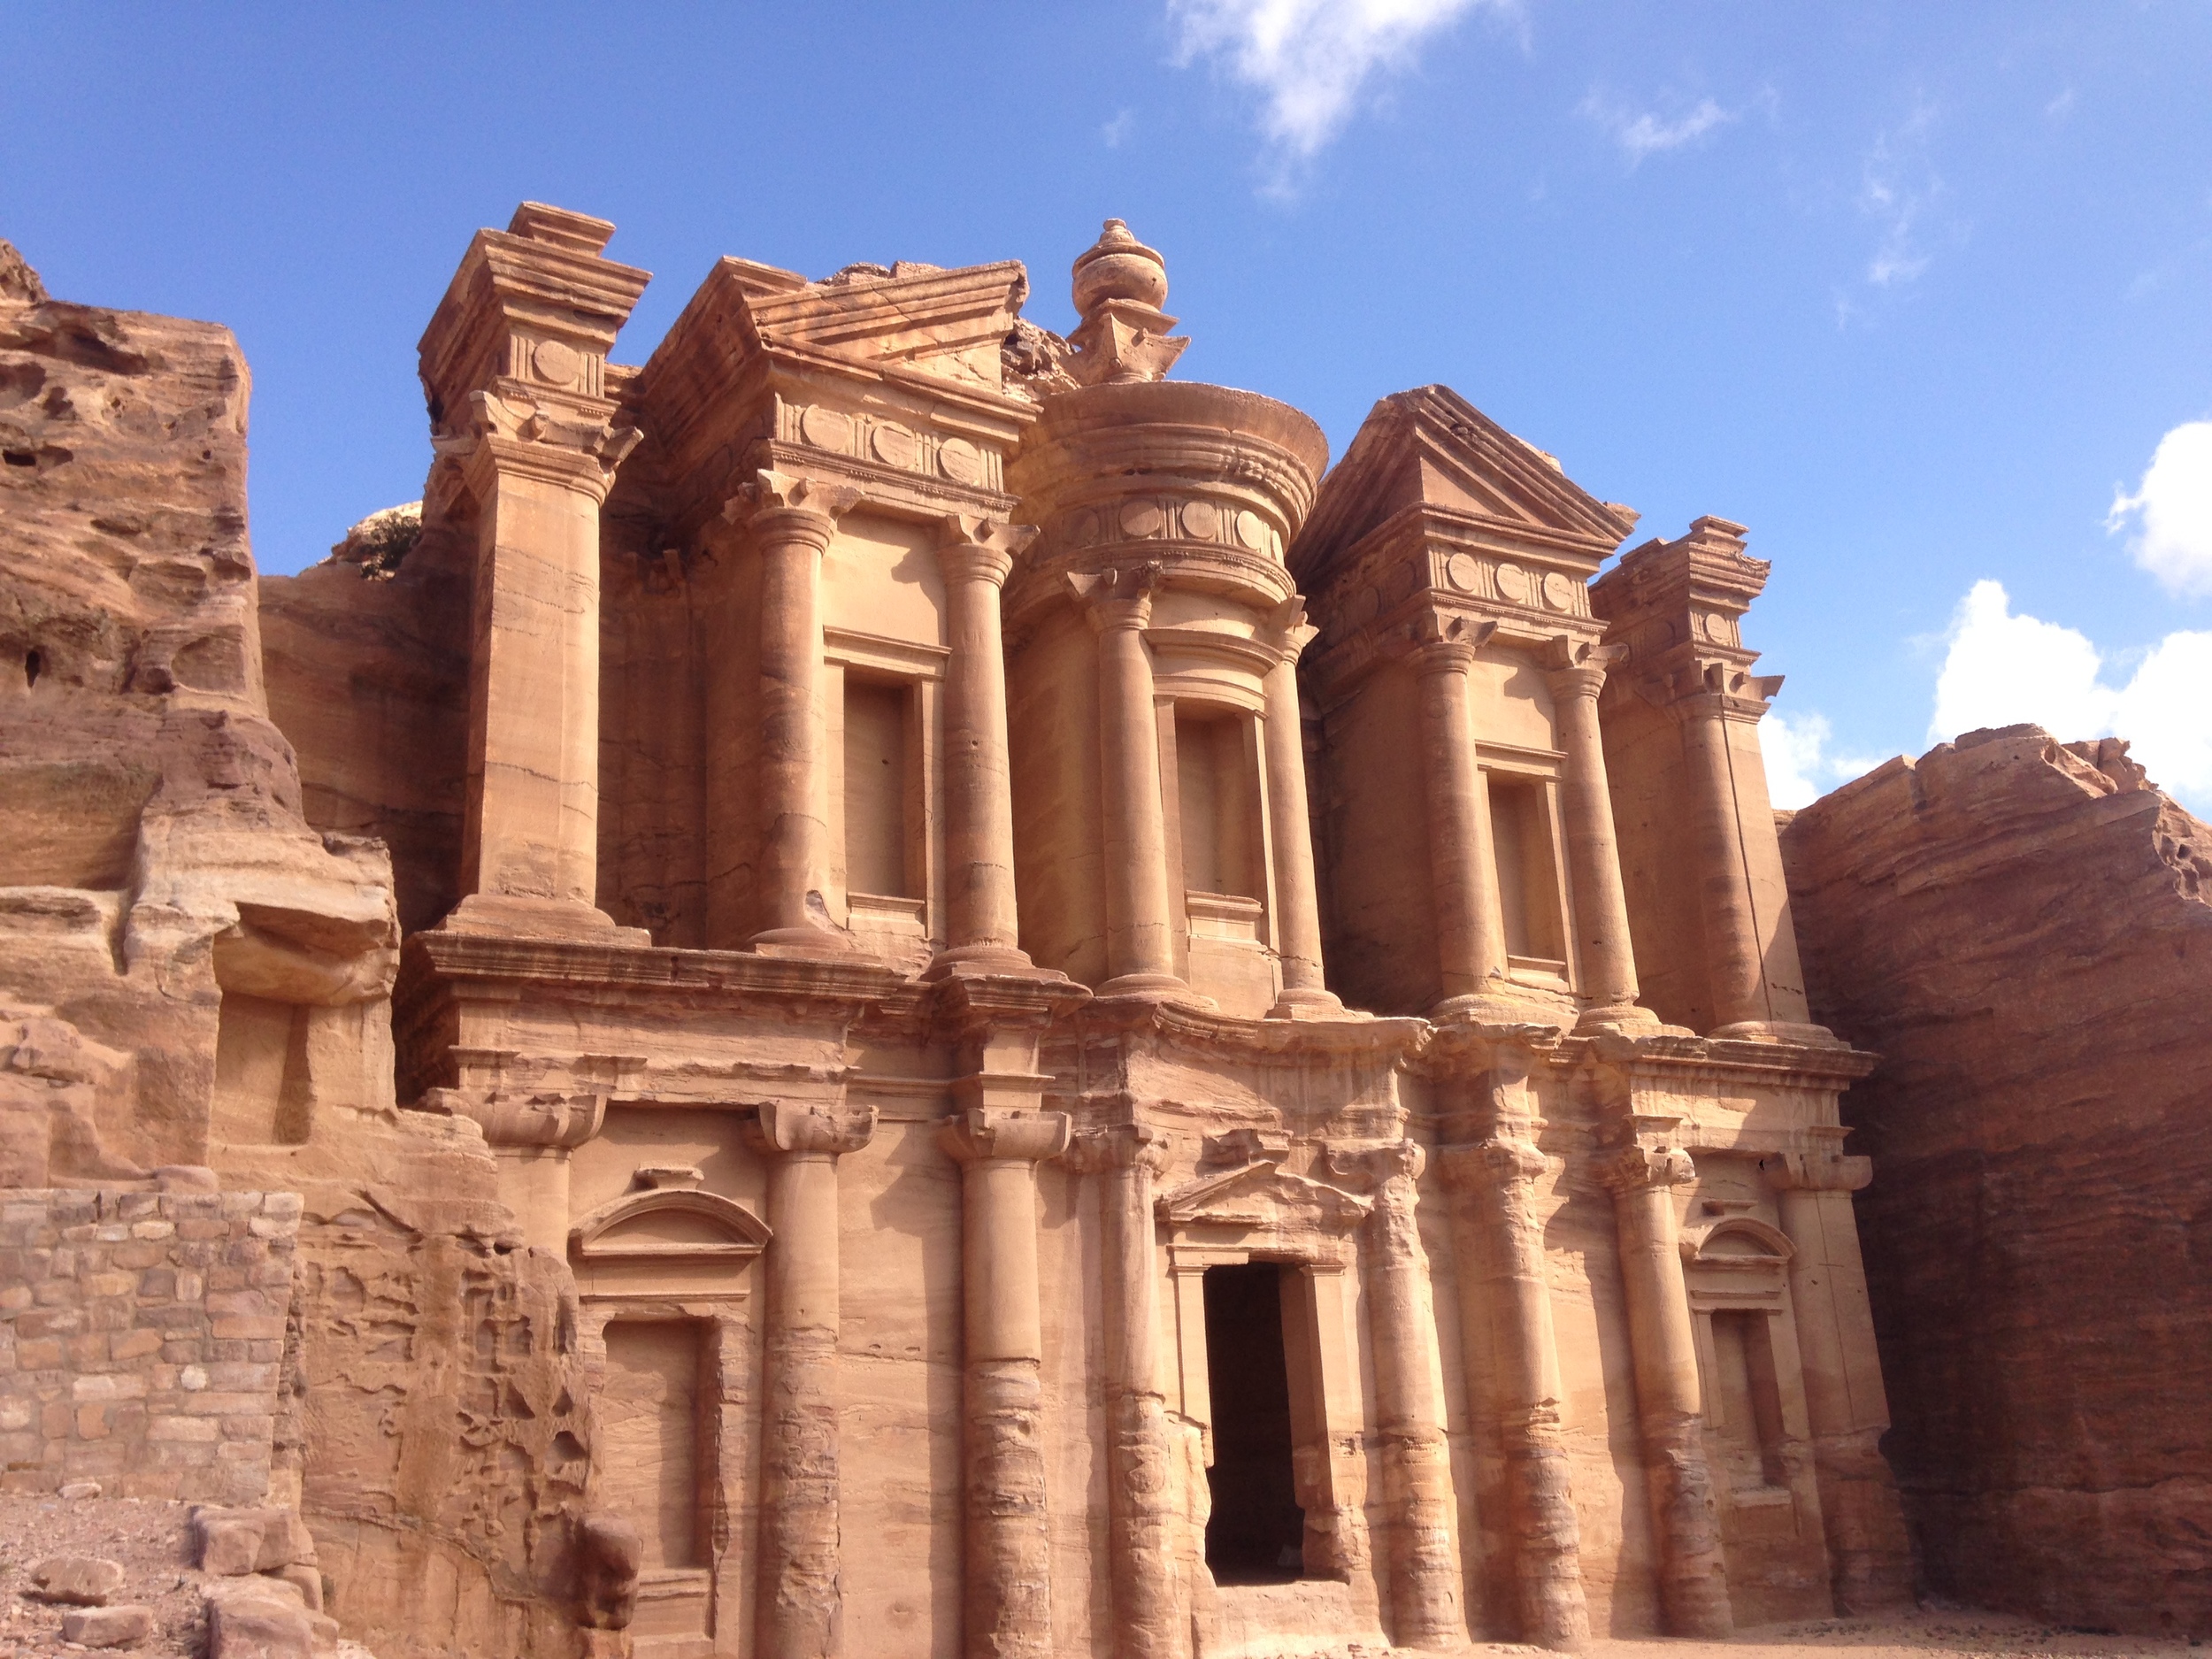  The monastery of Petra 